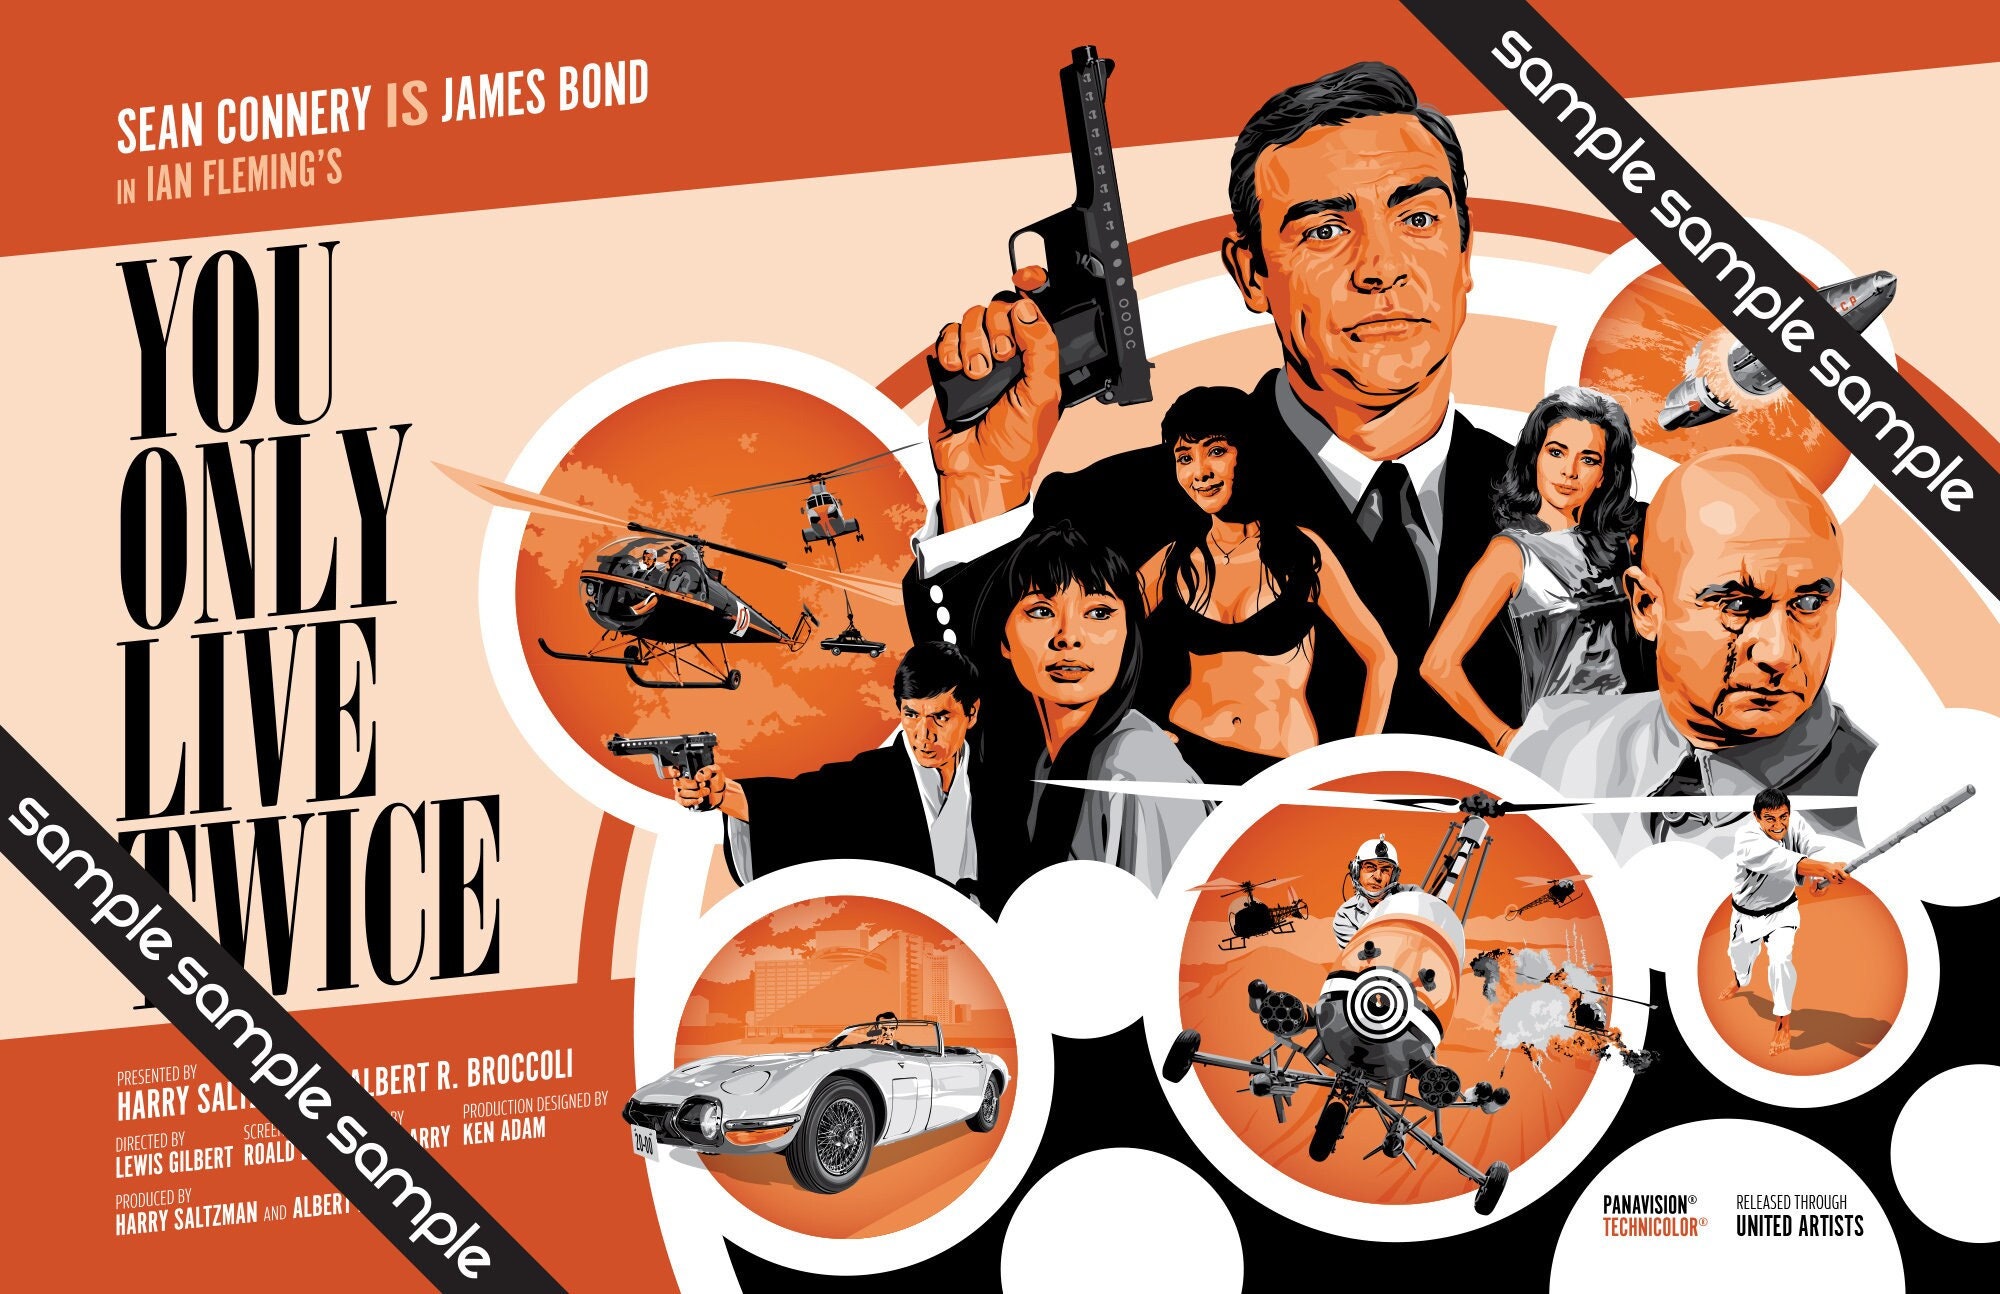 James Bond 007 You Only Live Twice Fan Art 17 X 11 Etsy New Zealand